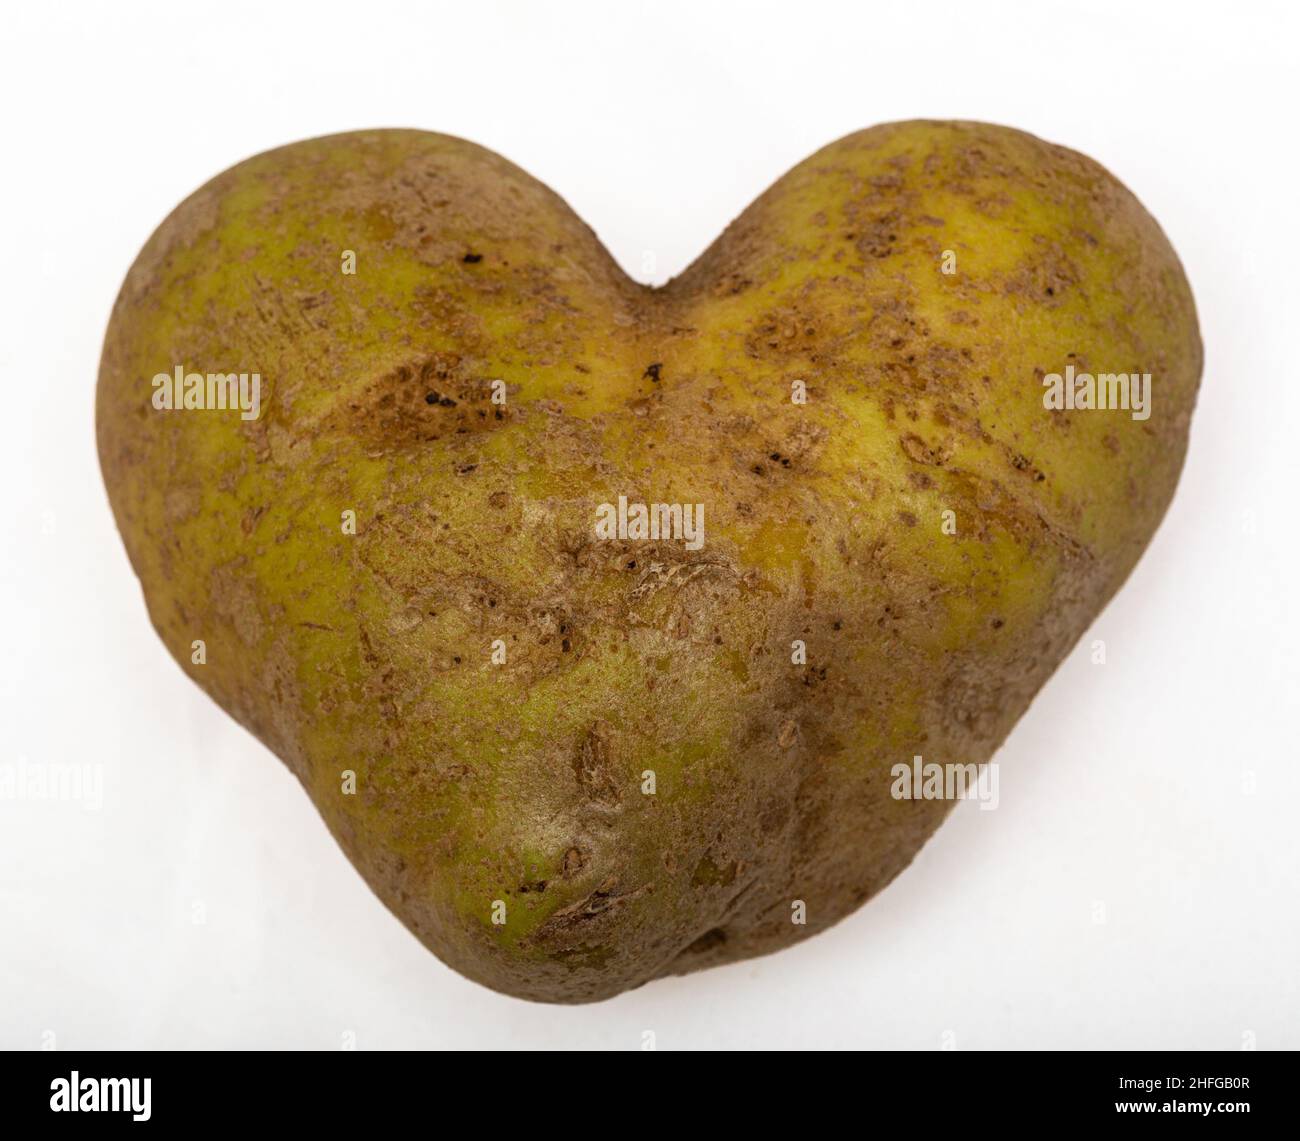 Heart shape potato on a white background.   Good for the theme of 'Love potato' Stock Photo